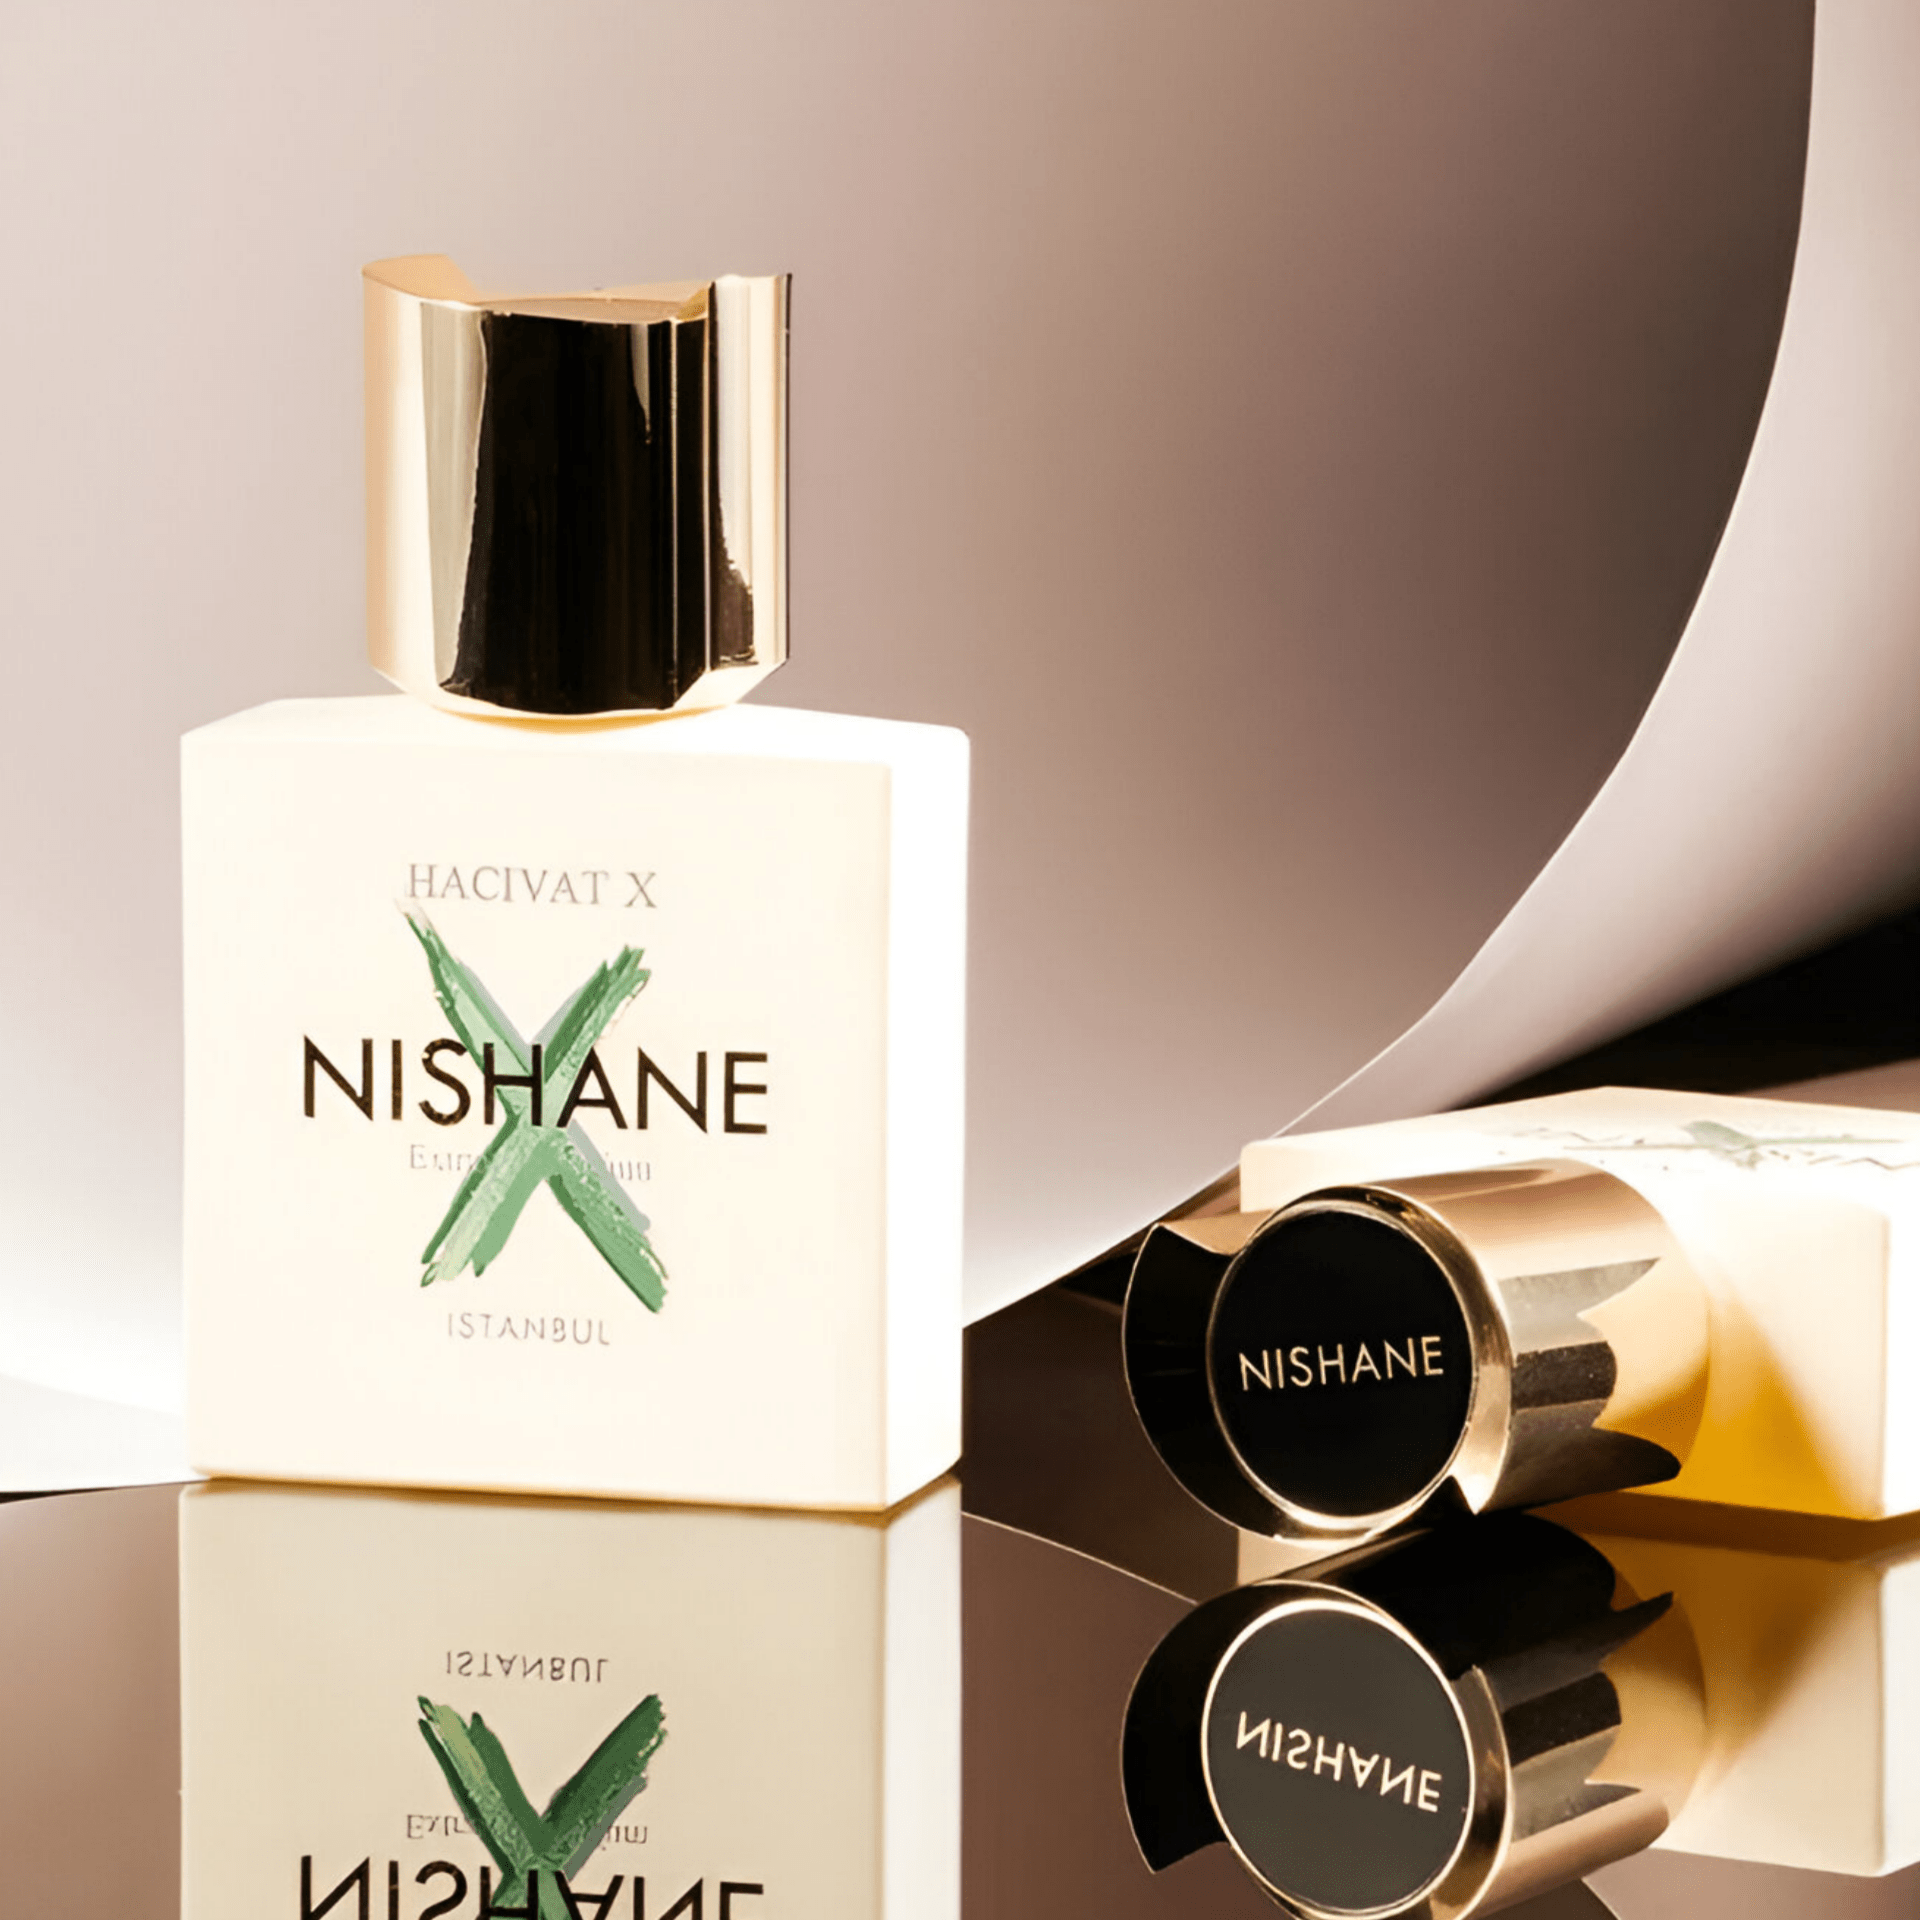 Nishane Hacivat X Extrait De Parfum | My Perfume Shop Australia